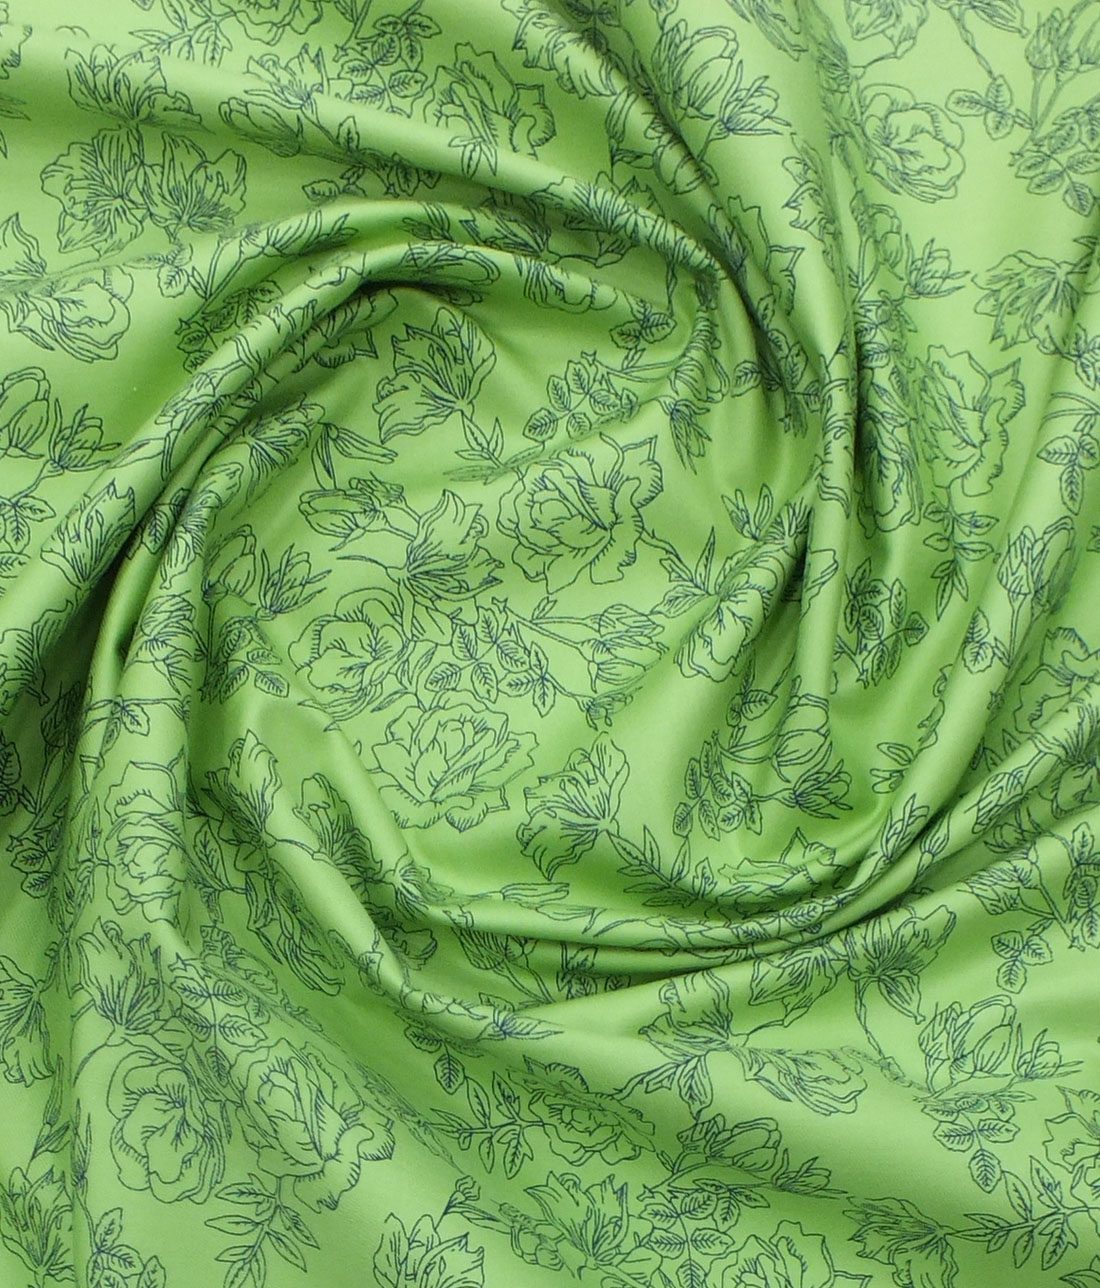 Monza Men's Light Green Cotton Floral Printed Shirt Fabric